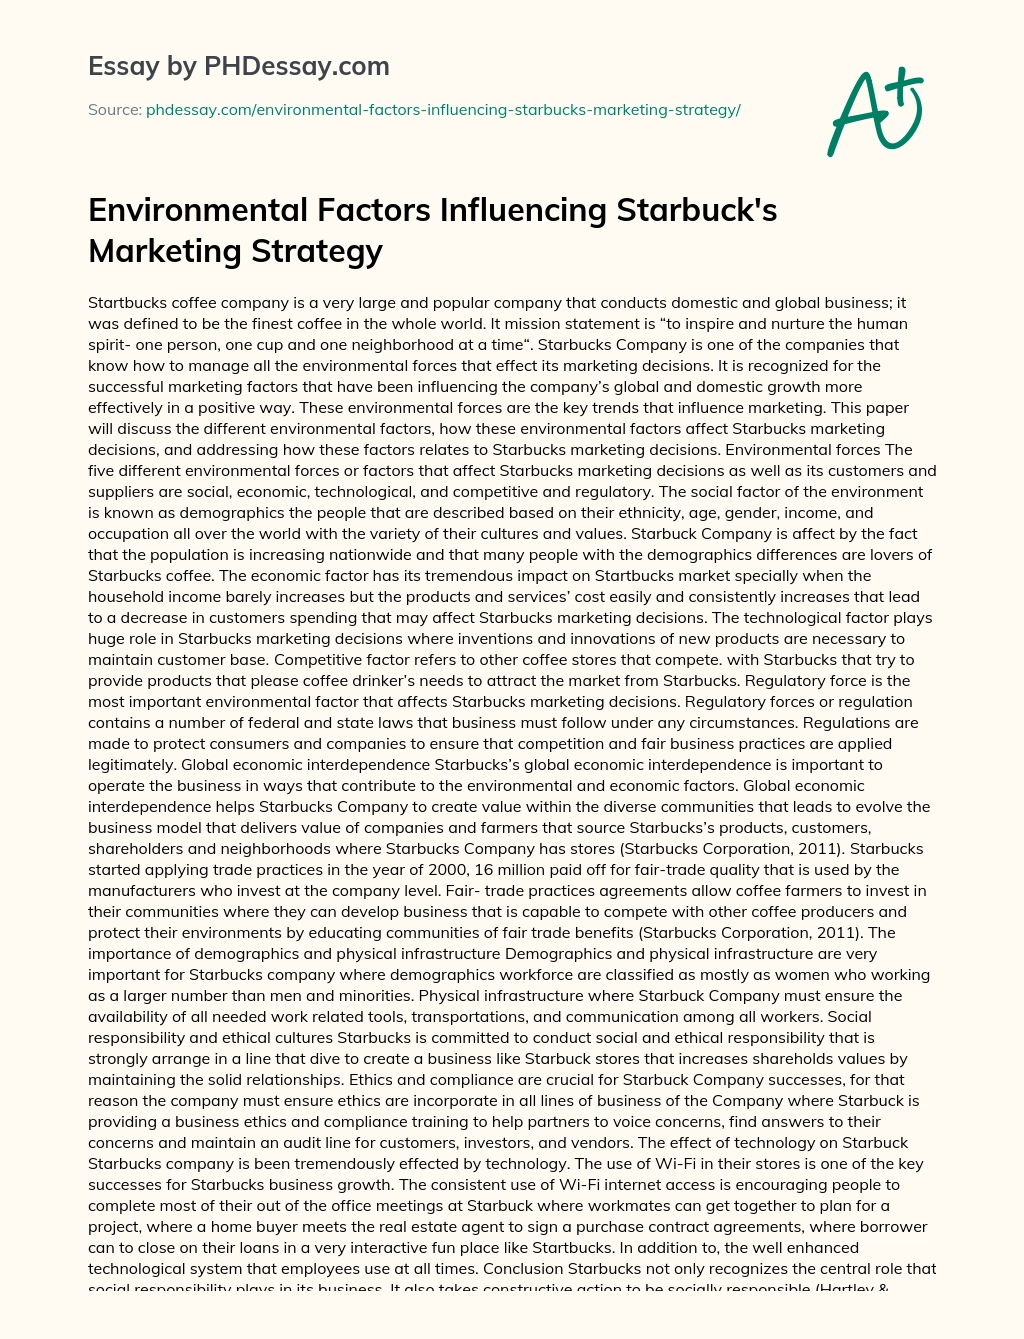 Environmental Factors Influencing Starbuck’s Marketing Strategy essay